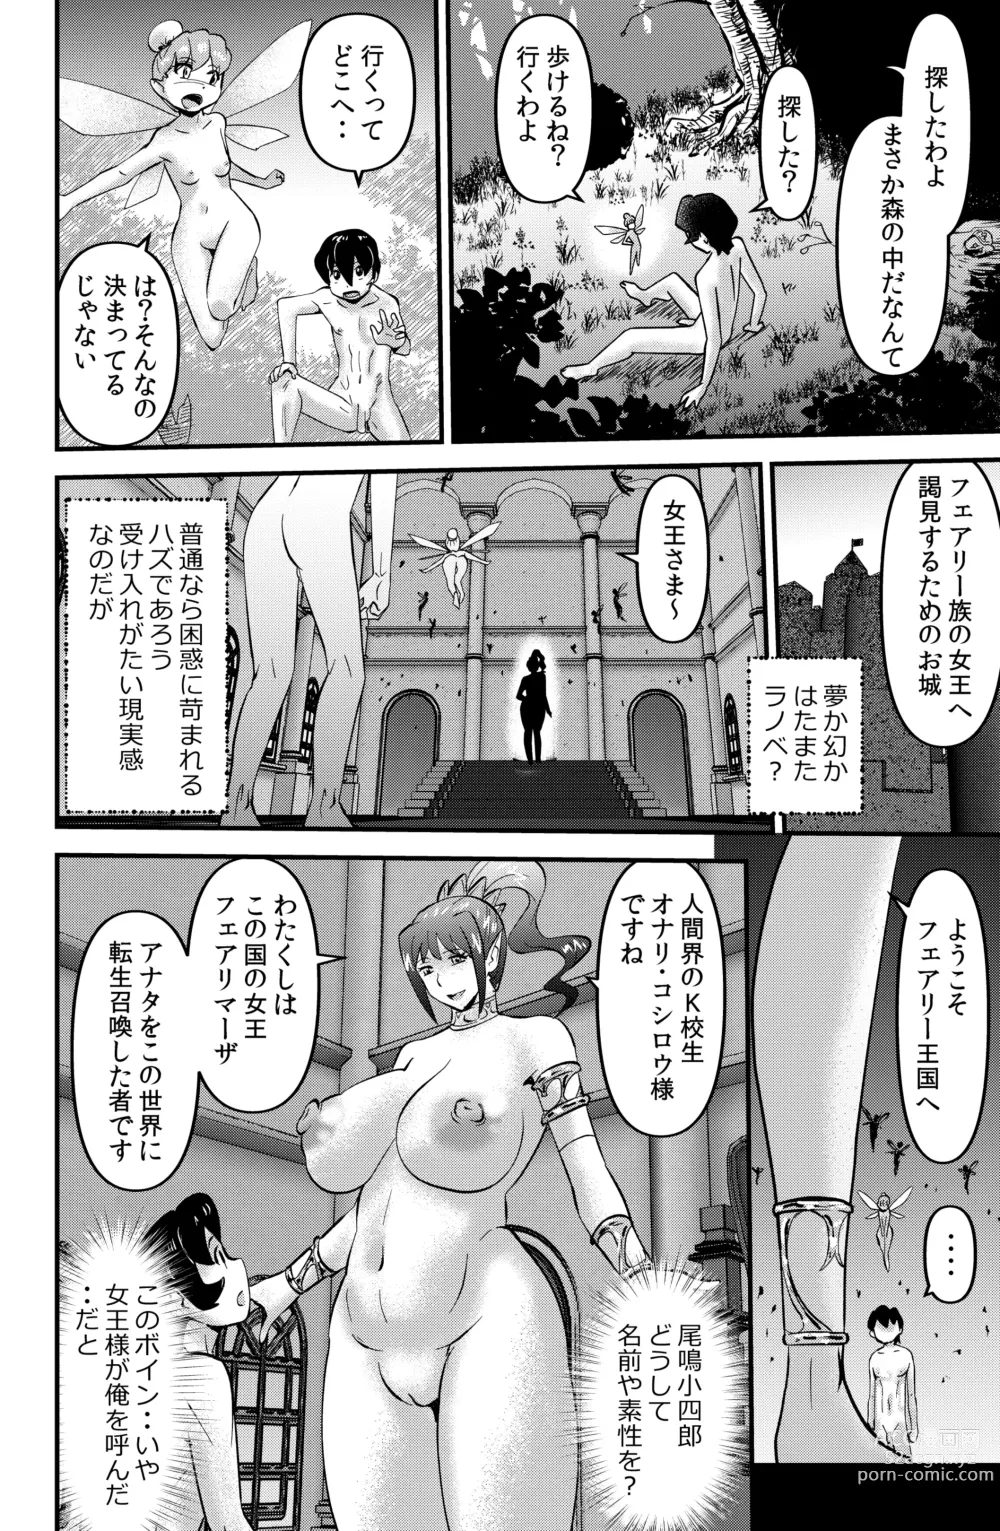 Page 4 of doujinshi Isekai Tensei Mono